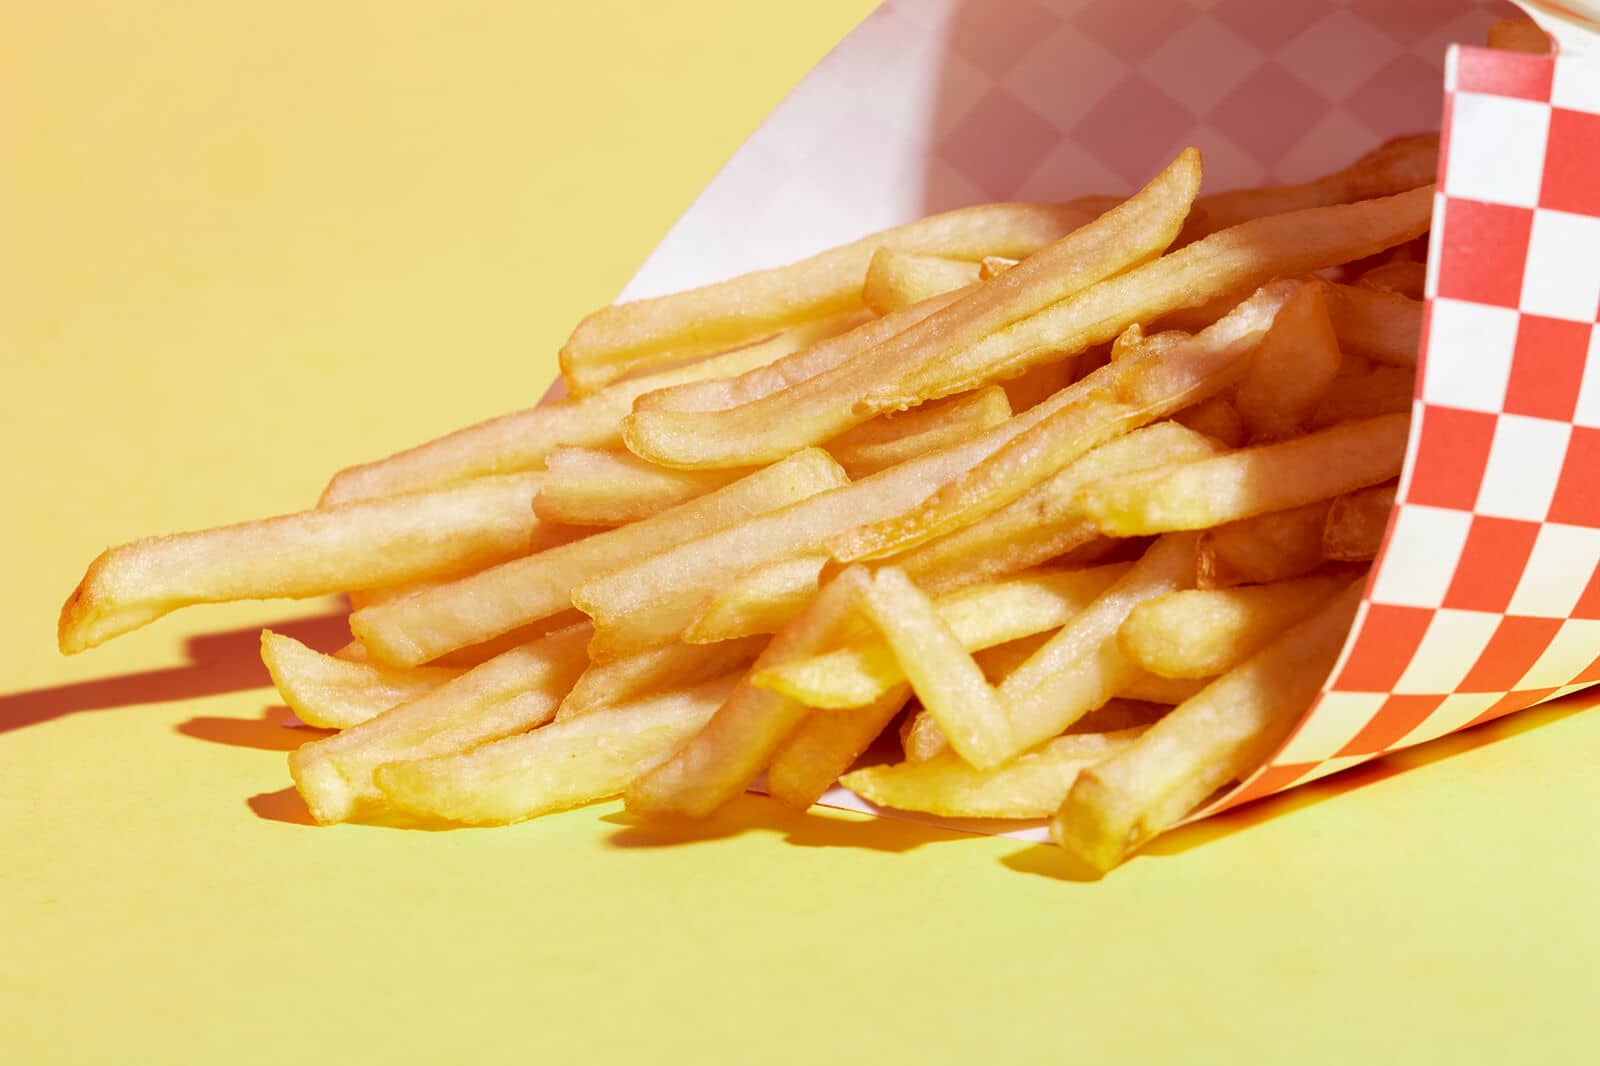 Root fries